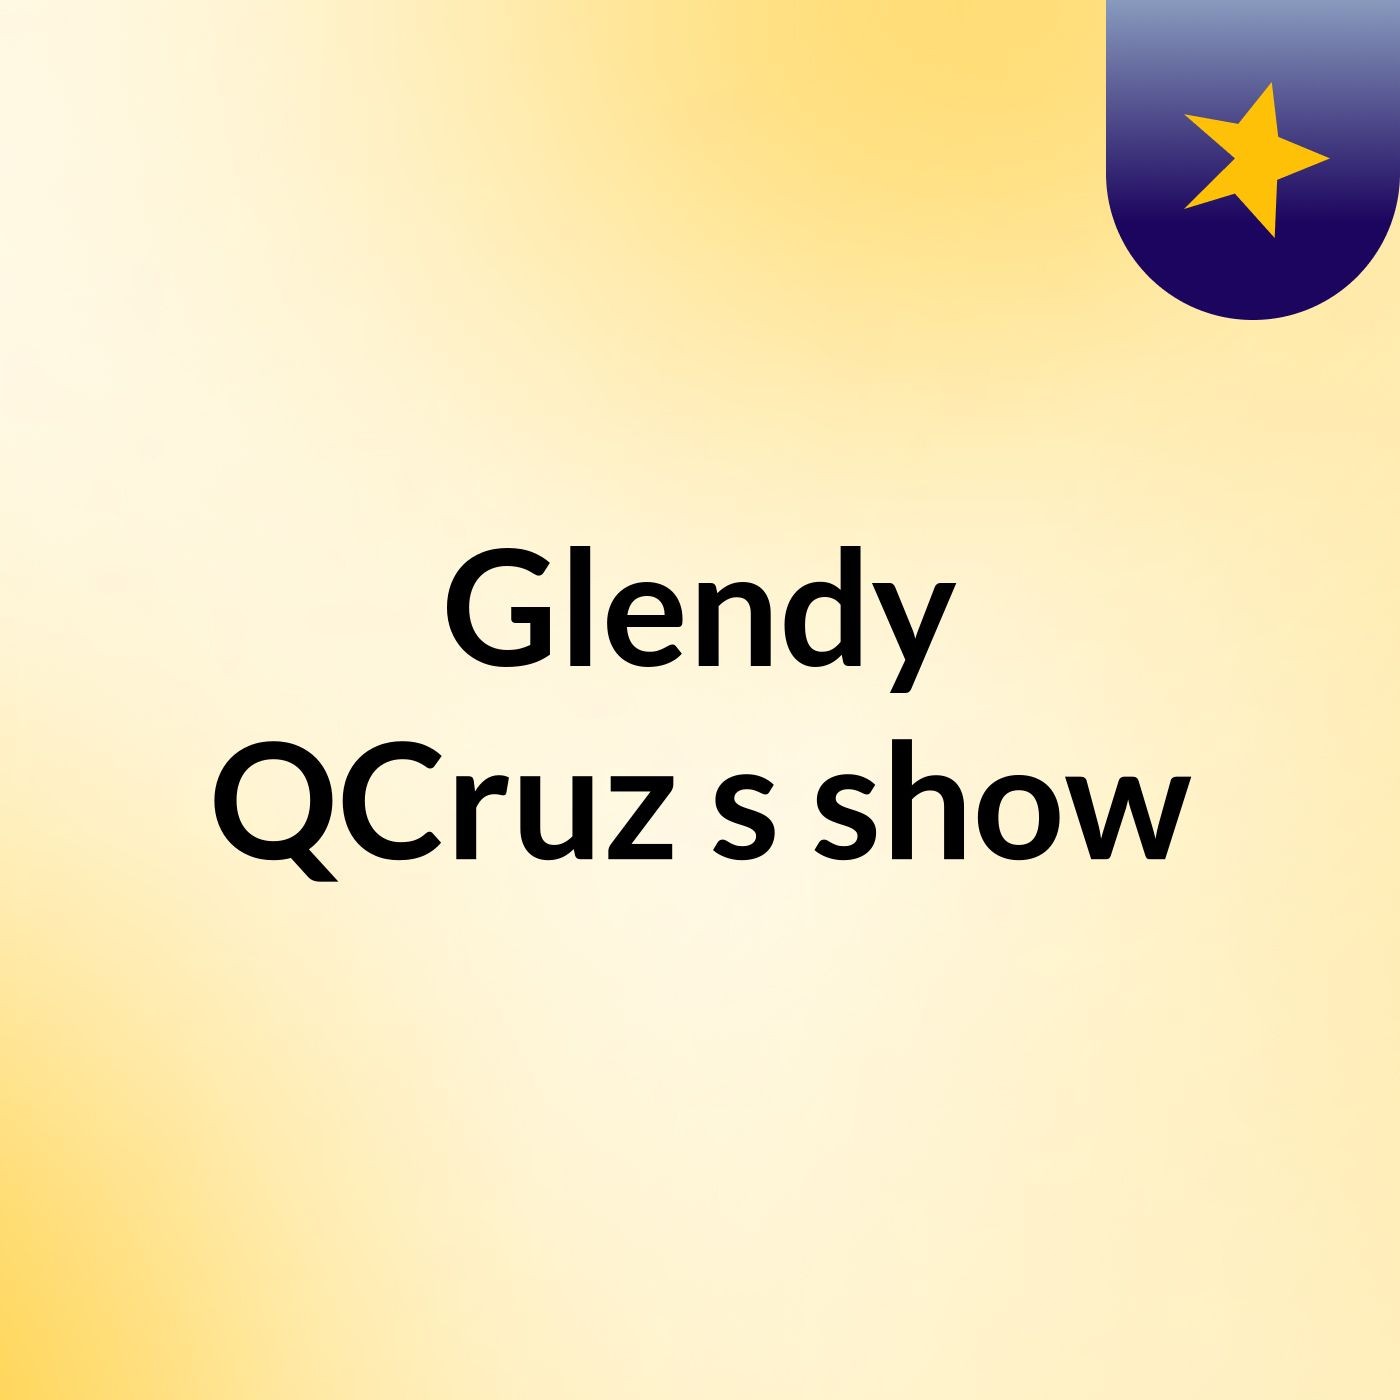 Glendy QCruz's show